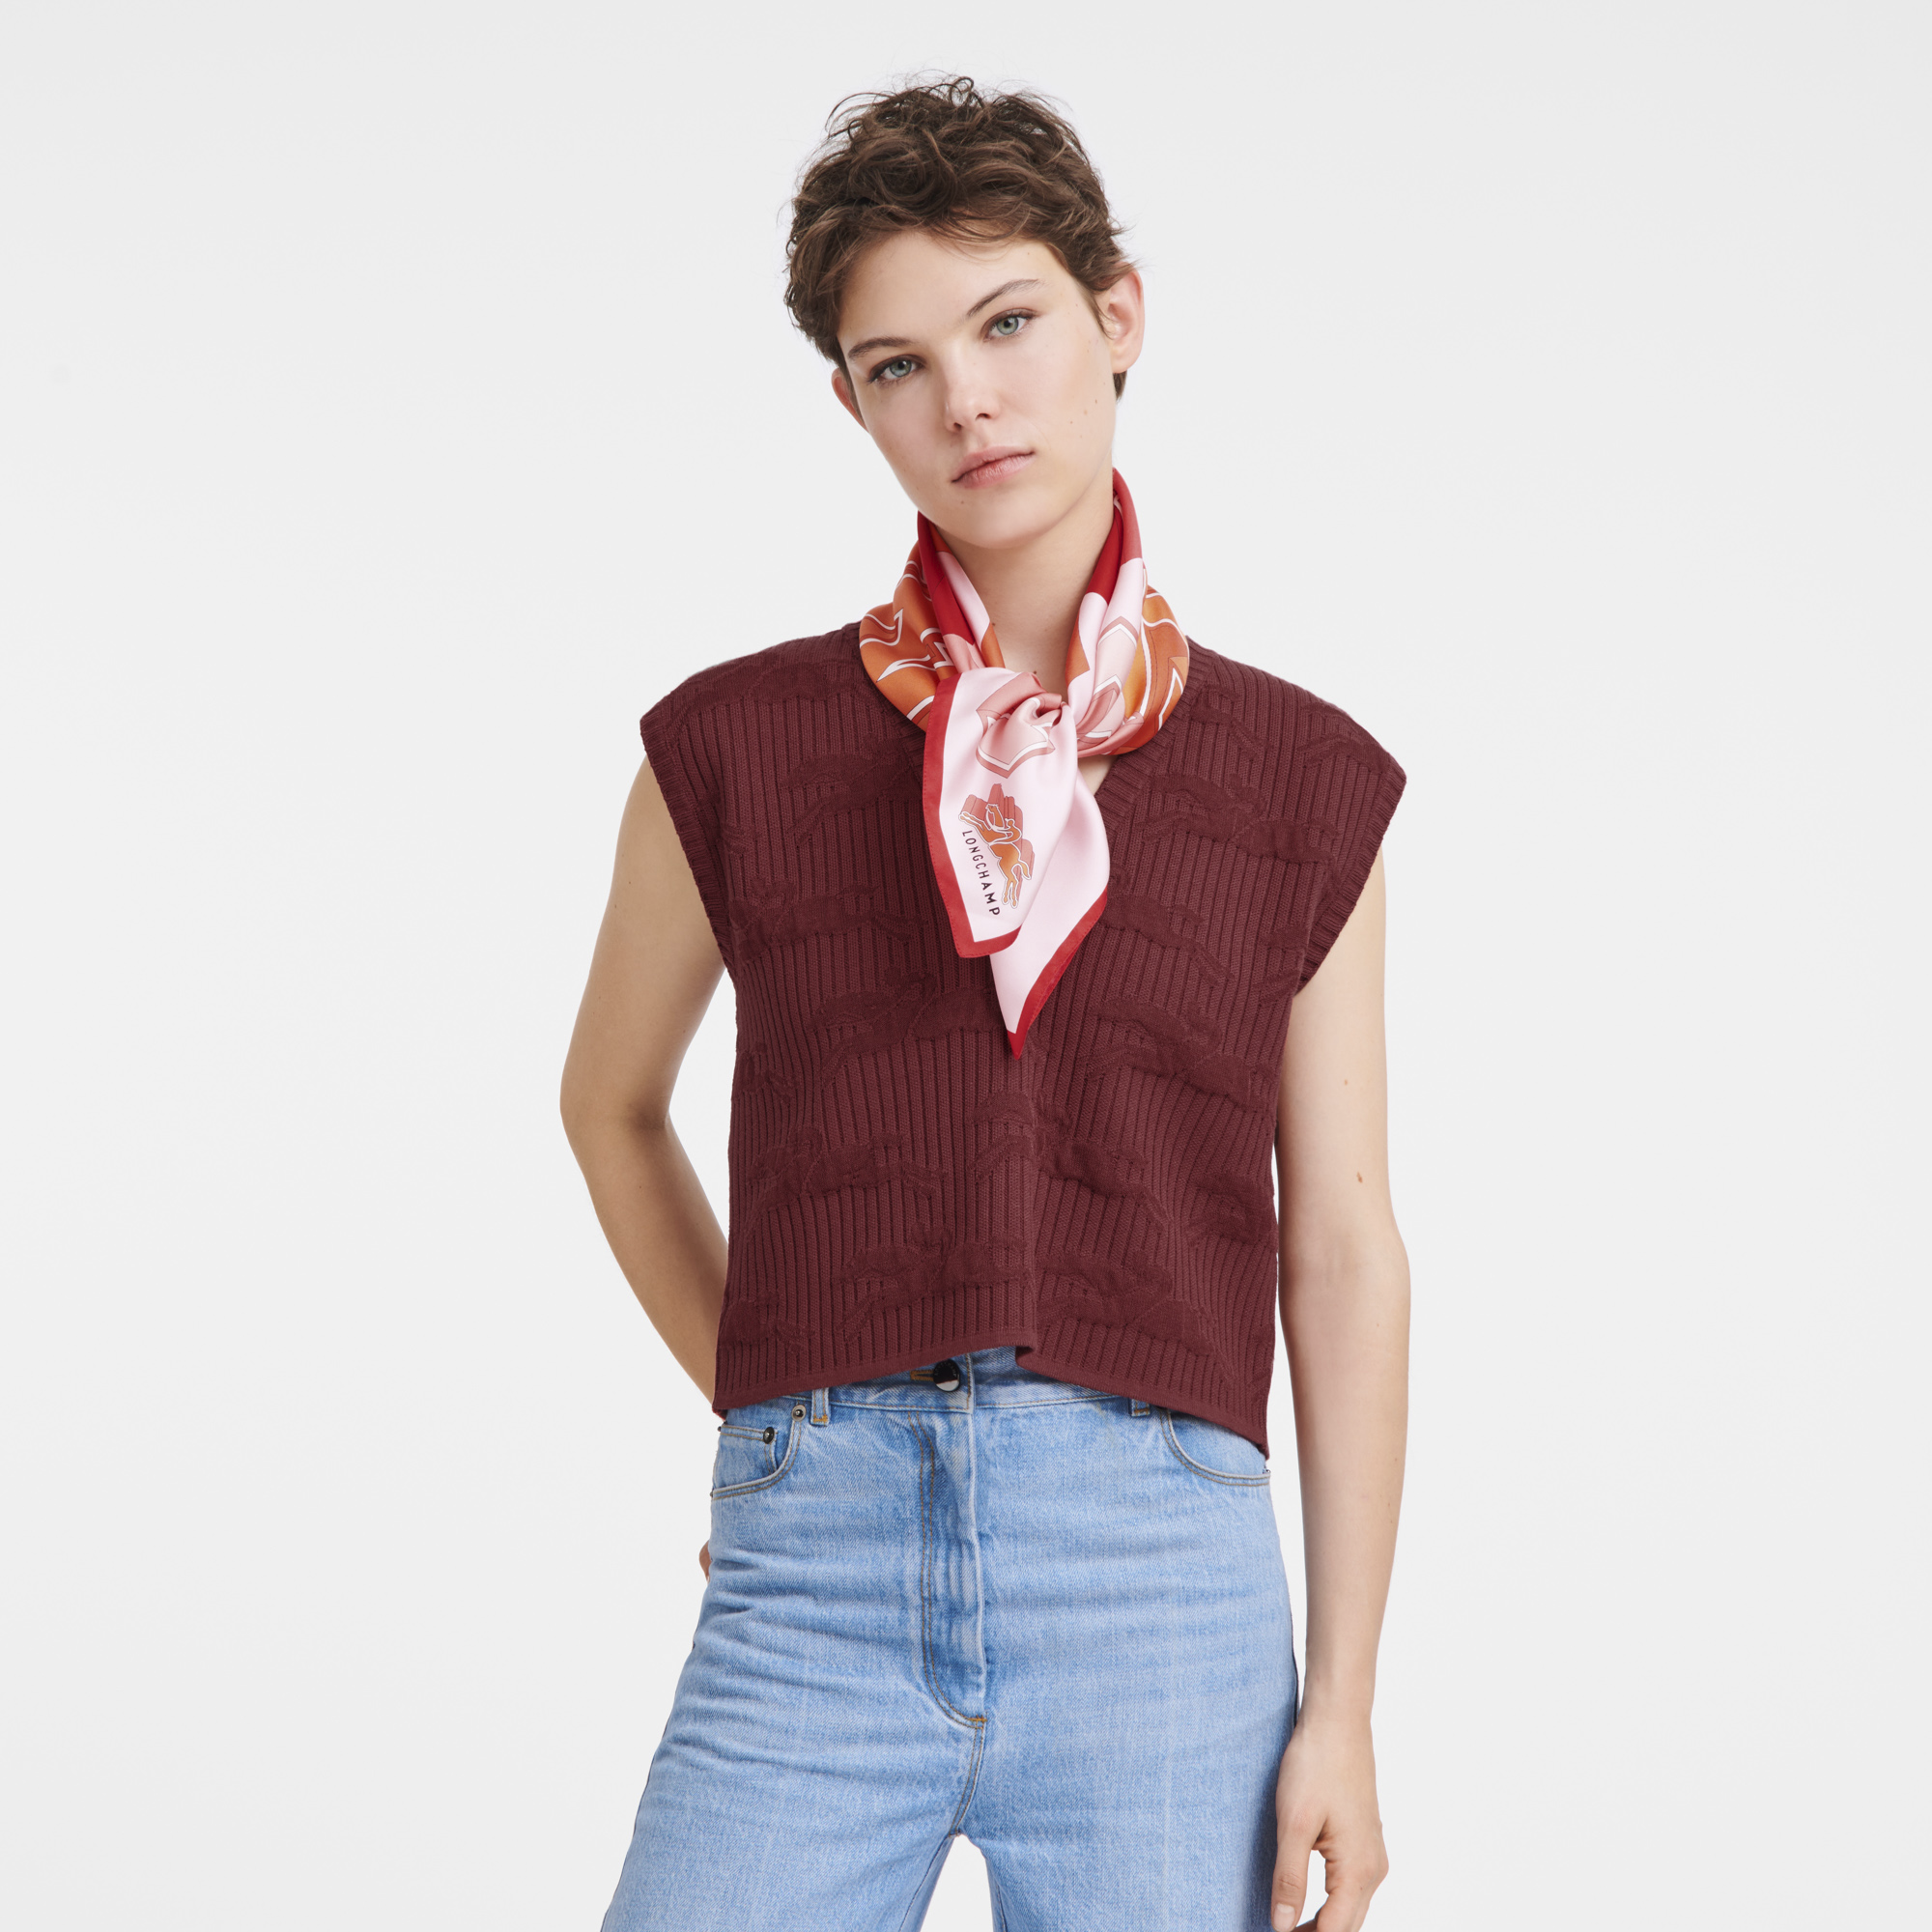 Longchamp University 絲質圍巾 70, 草莓色